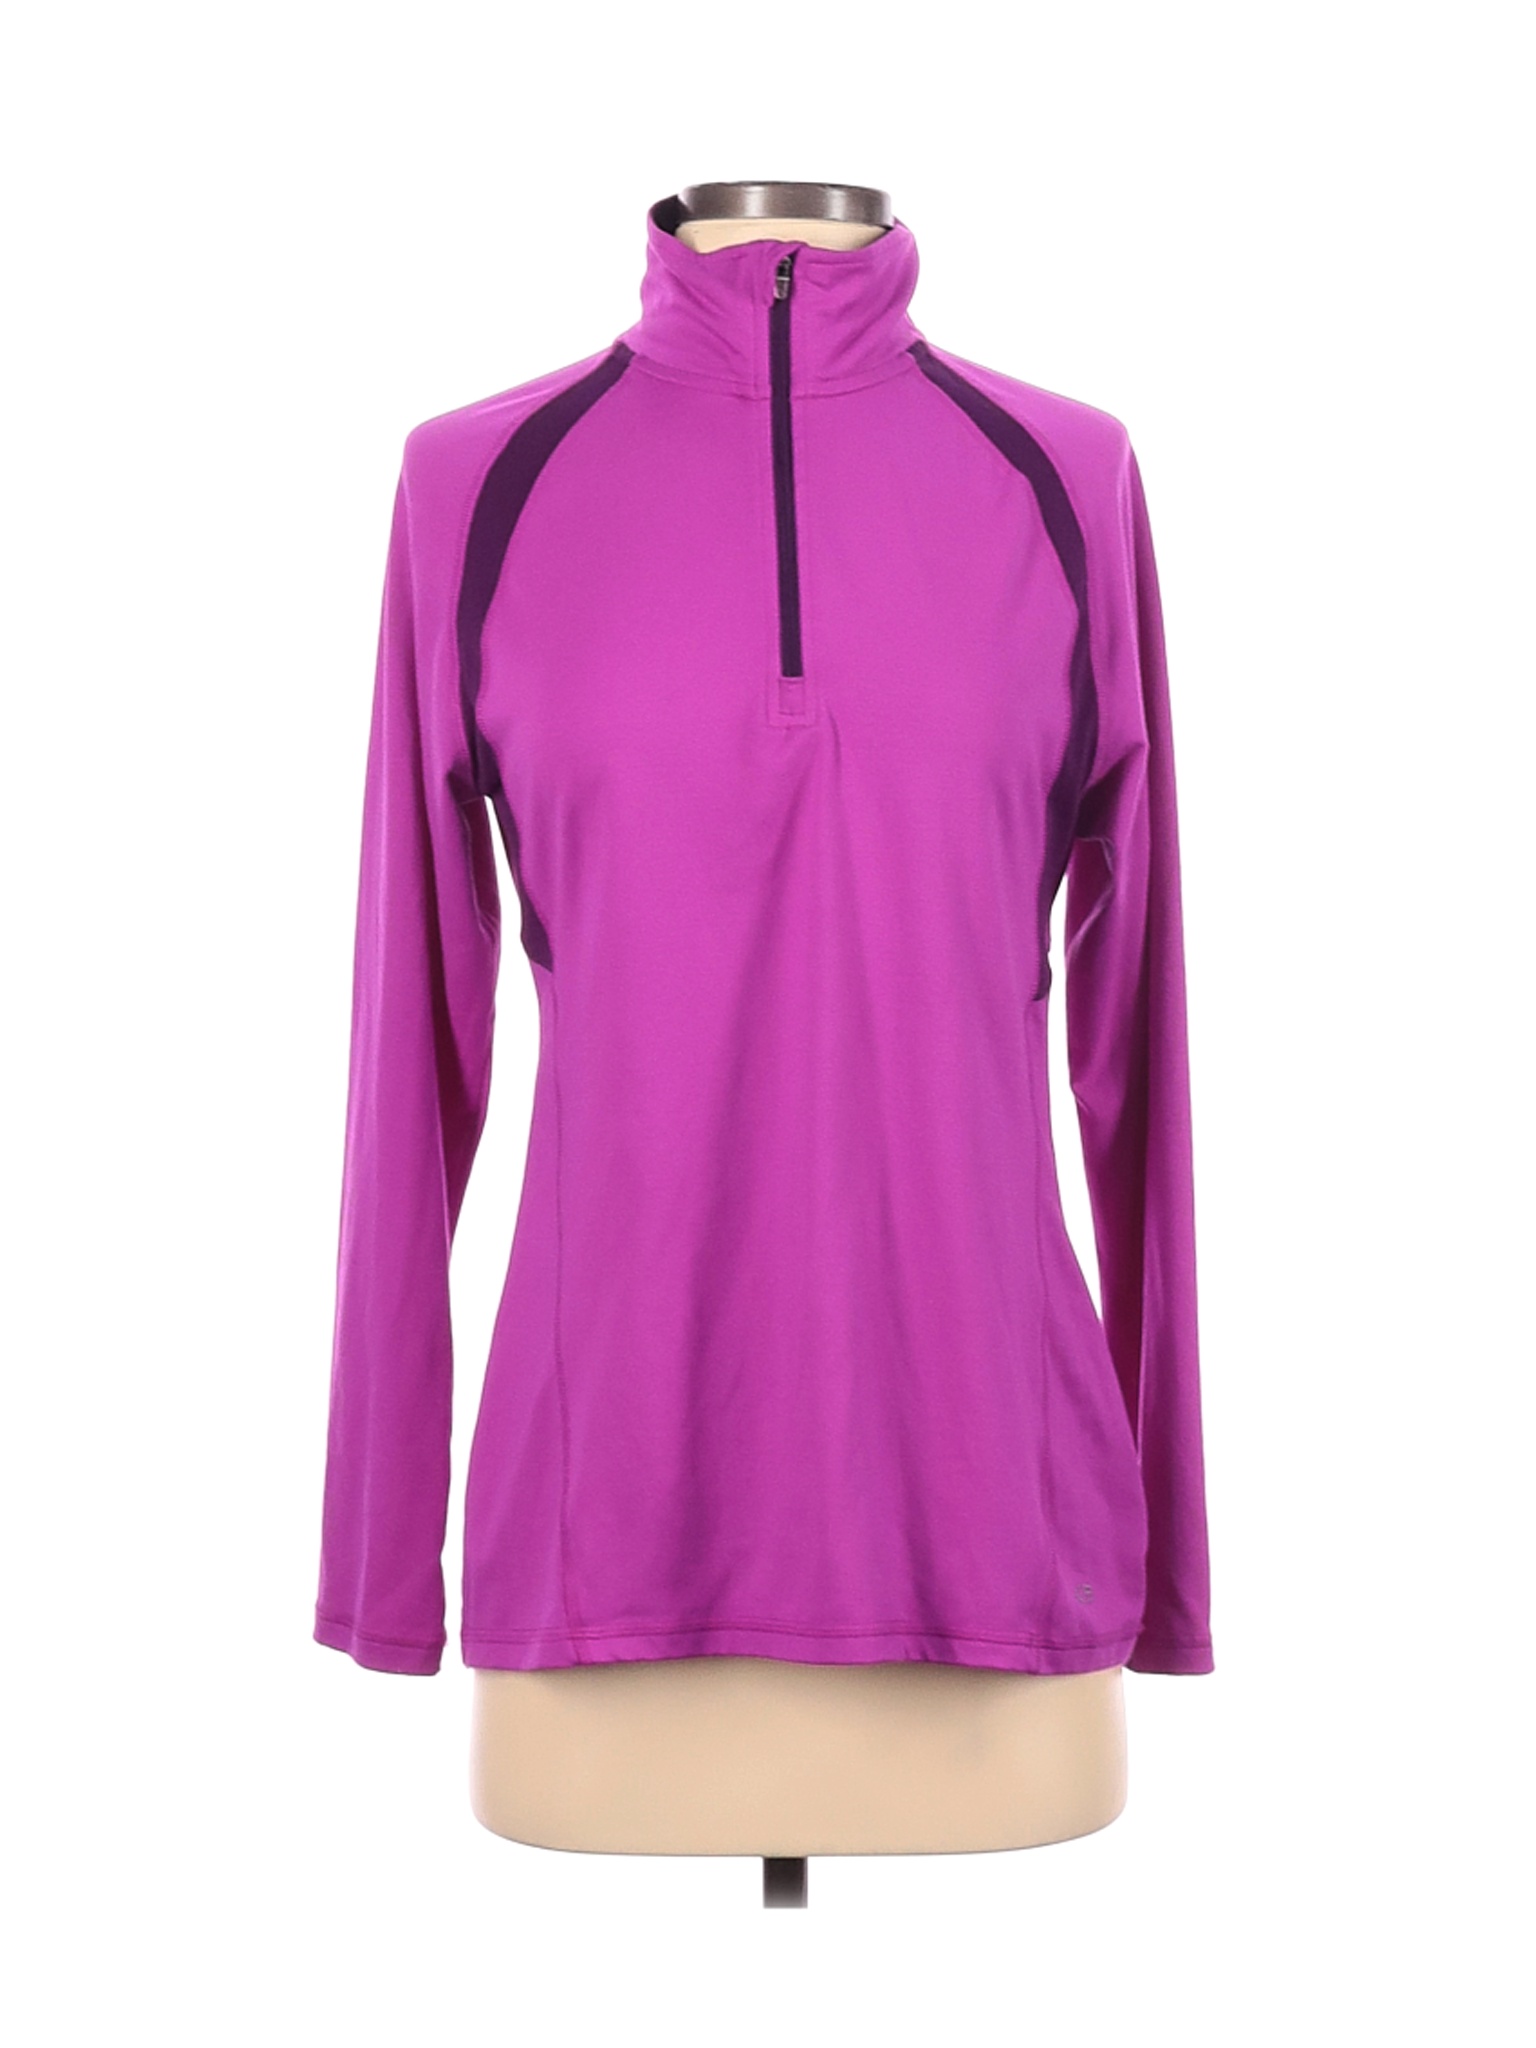 C9 By Champion Women Purple Track Jacket S | eBay